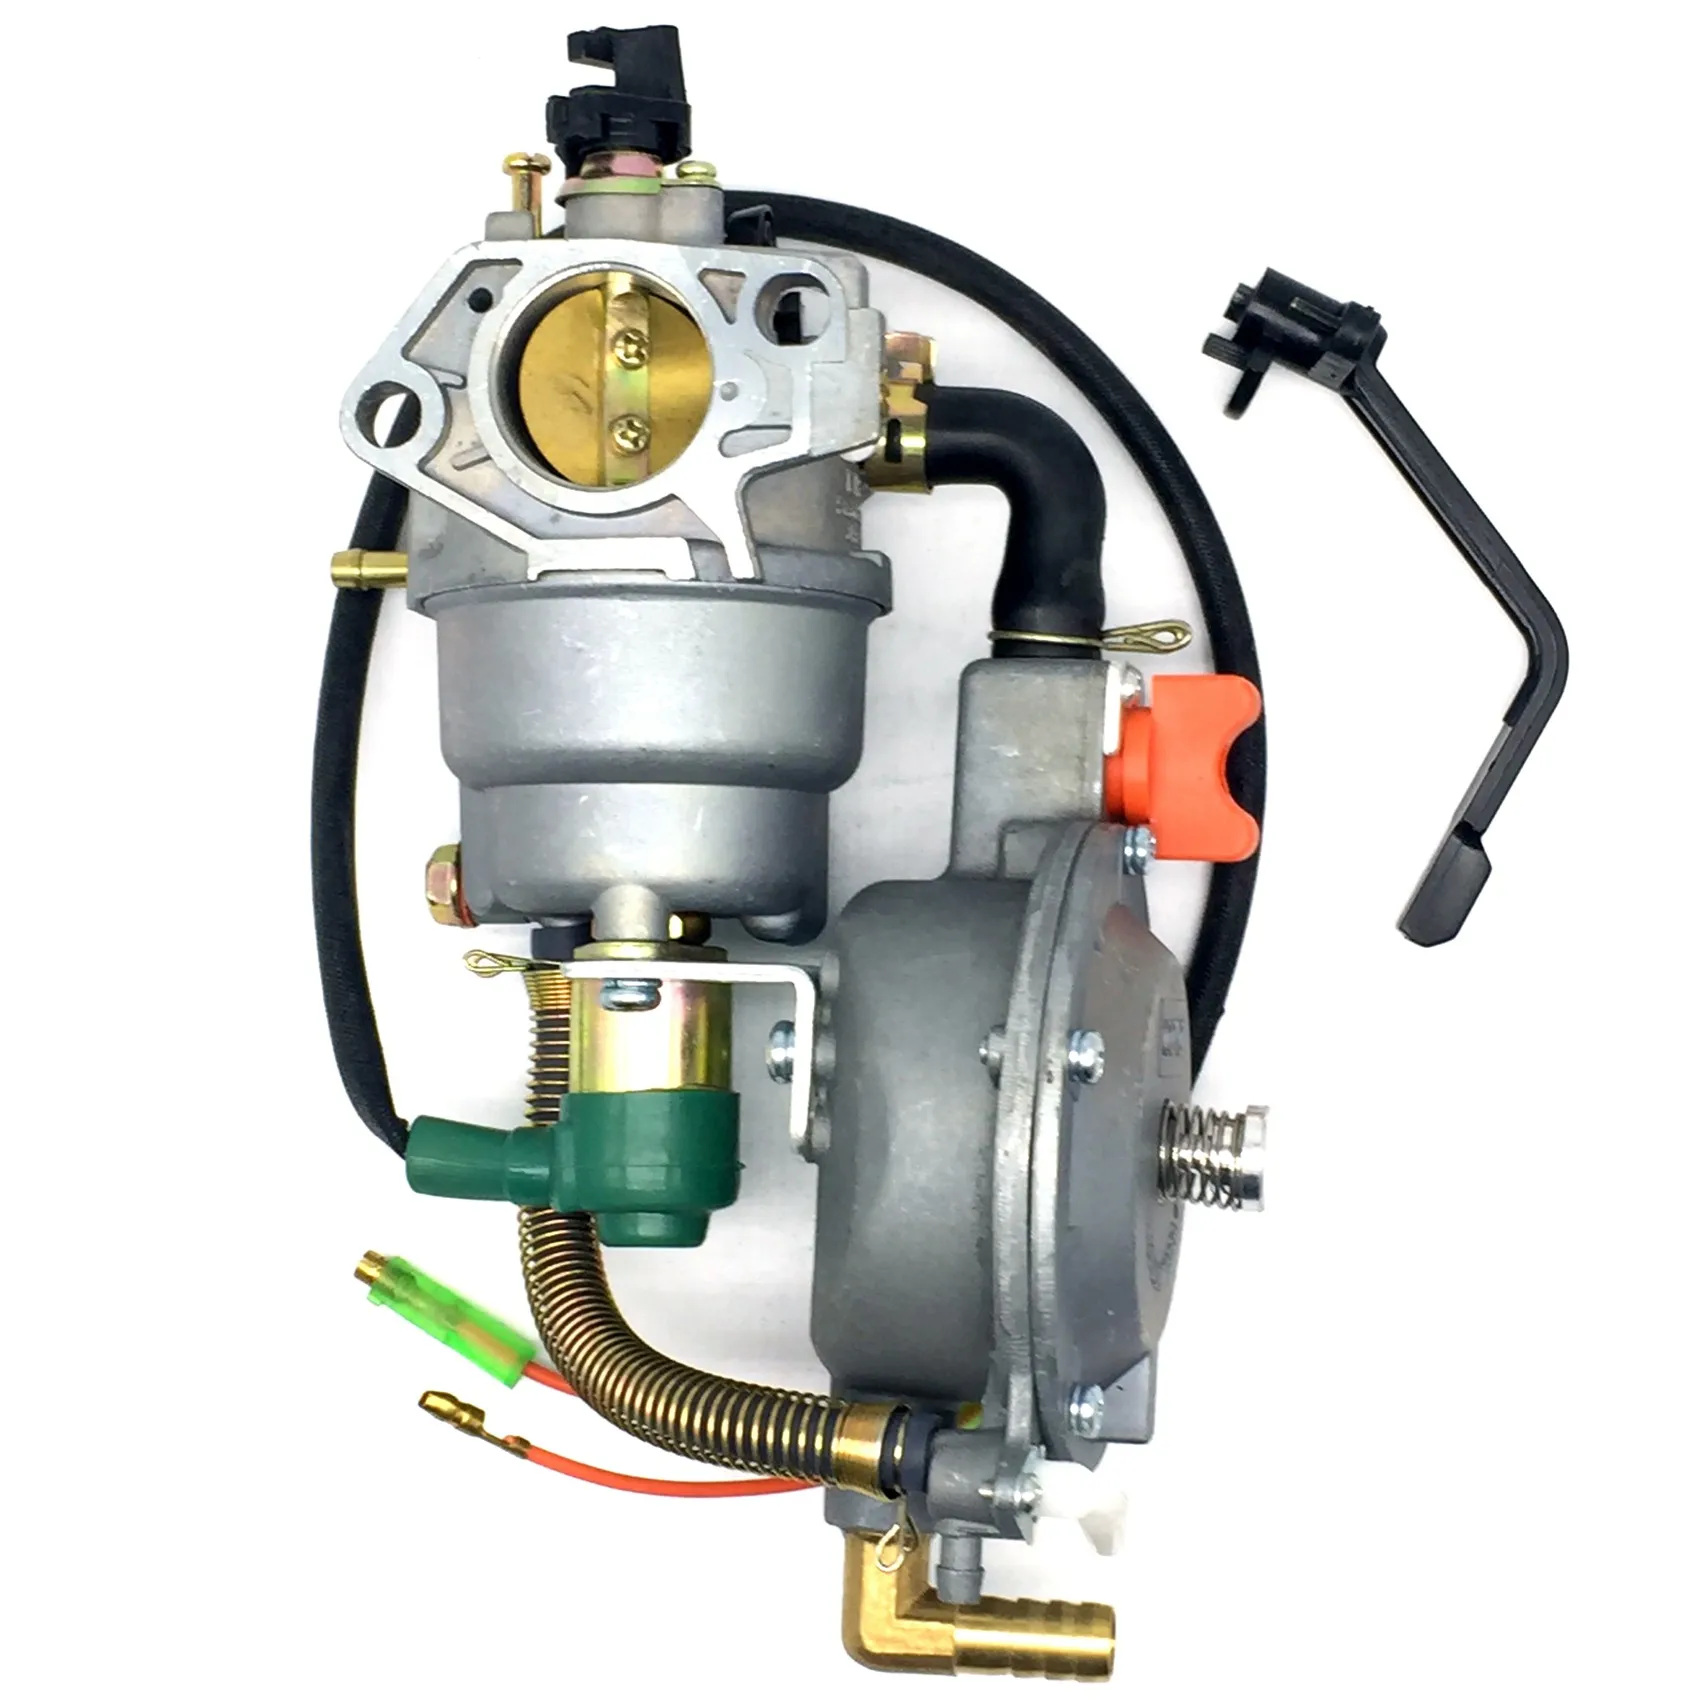 Dual Fuel Generator Carburetor for GX390 GX340 Gas Small Engines 188F 5KW-8KW NG Petrol Motorcycle